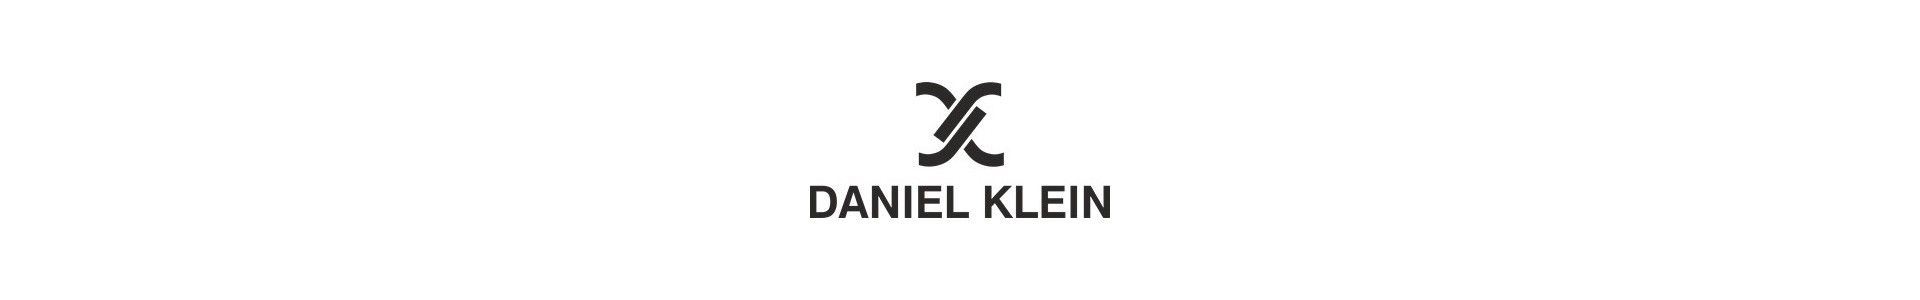 Zegarki damskie - Daniel Klein - Super-Zegarek.pl